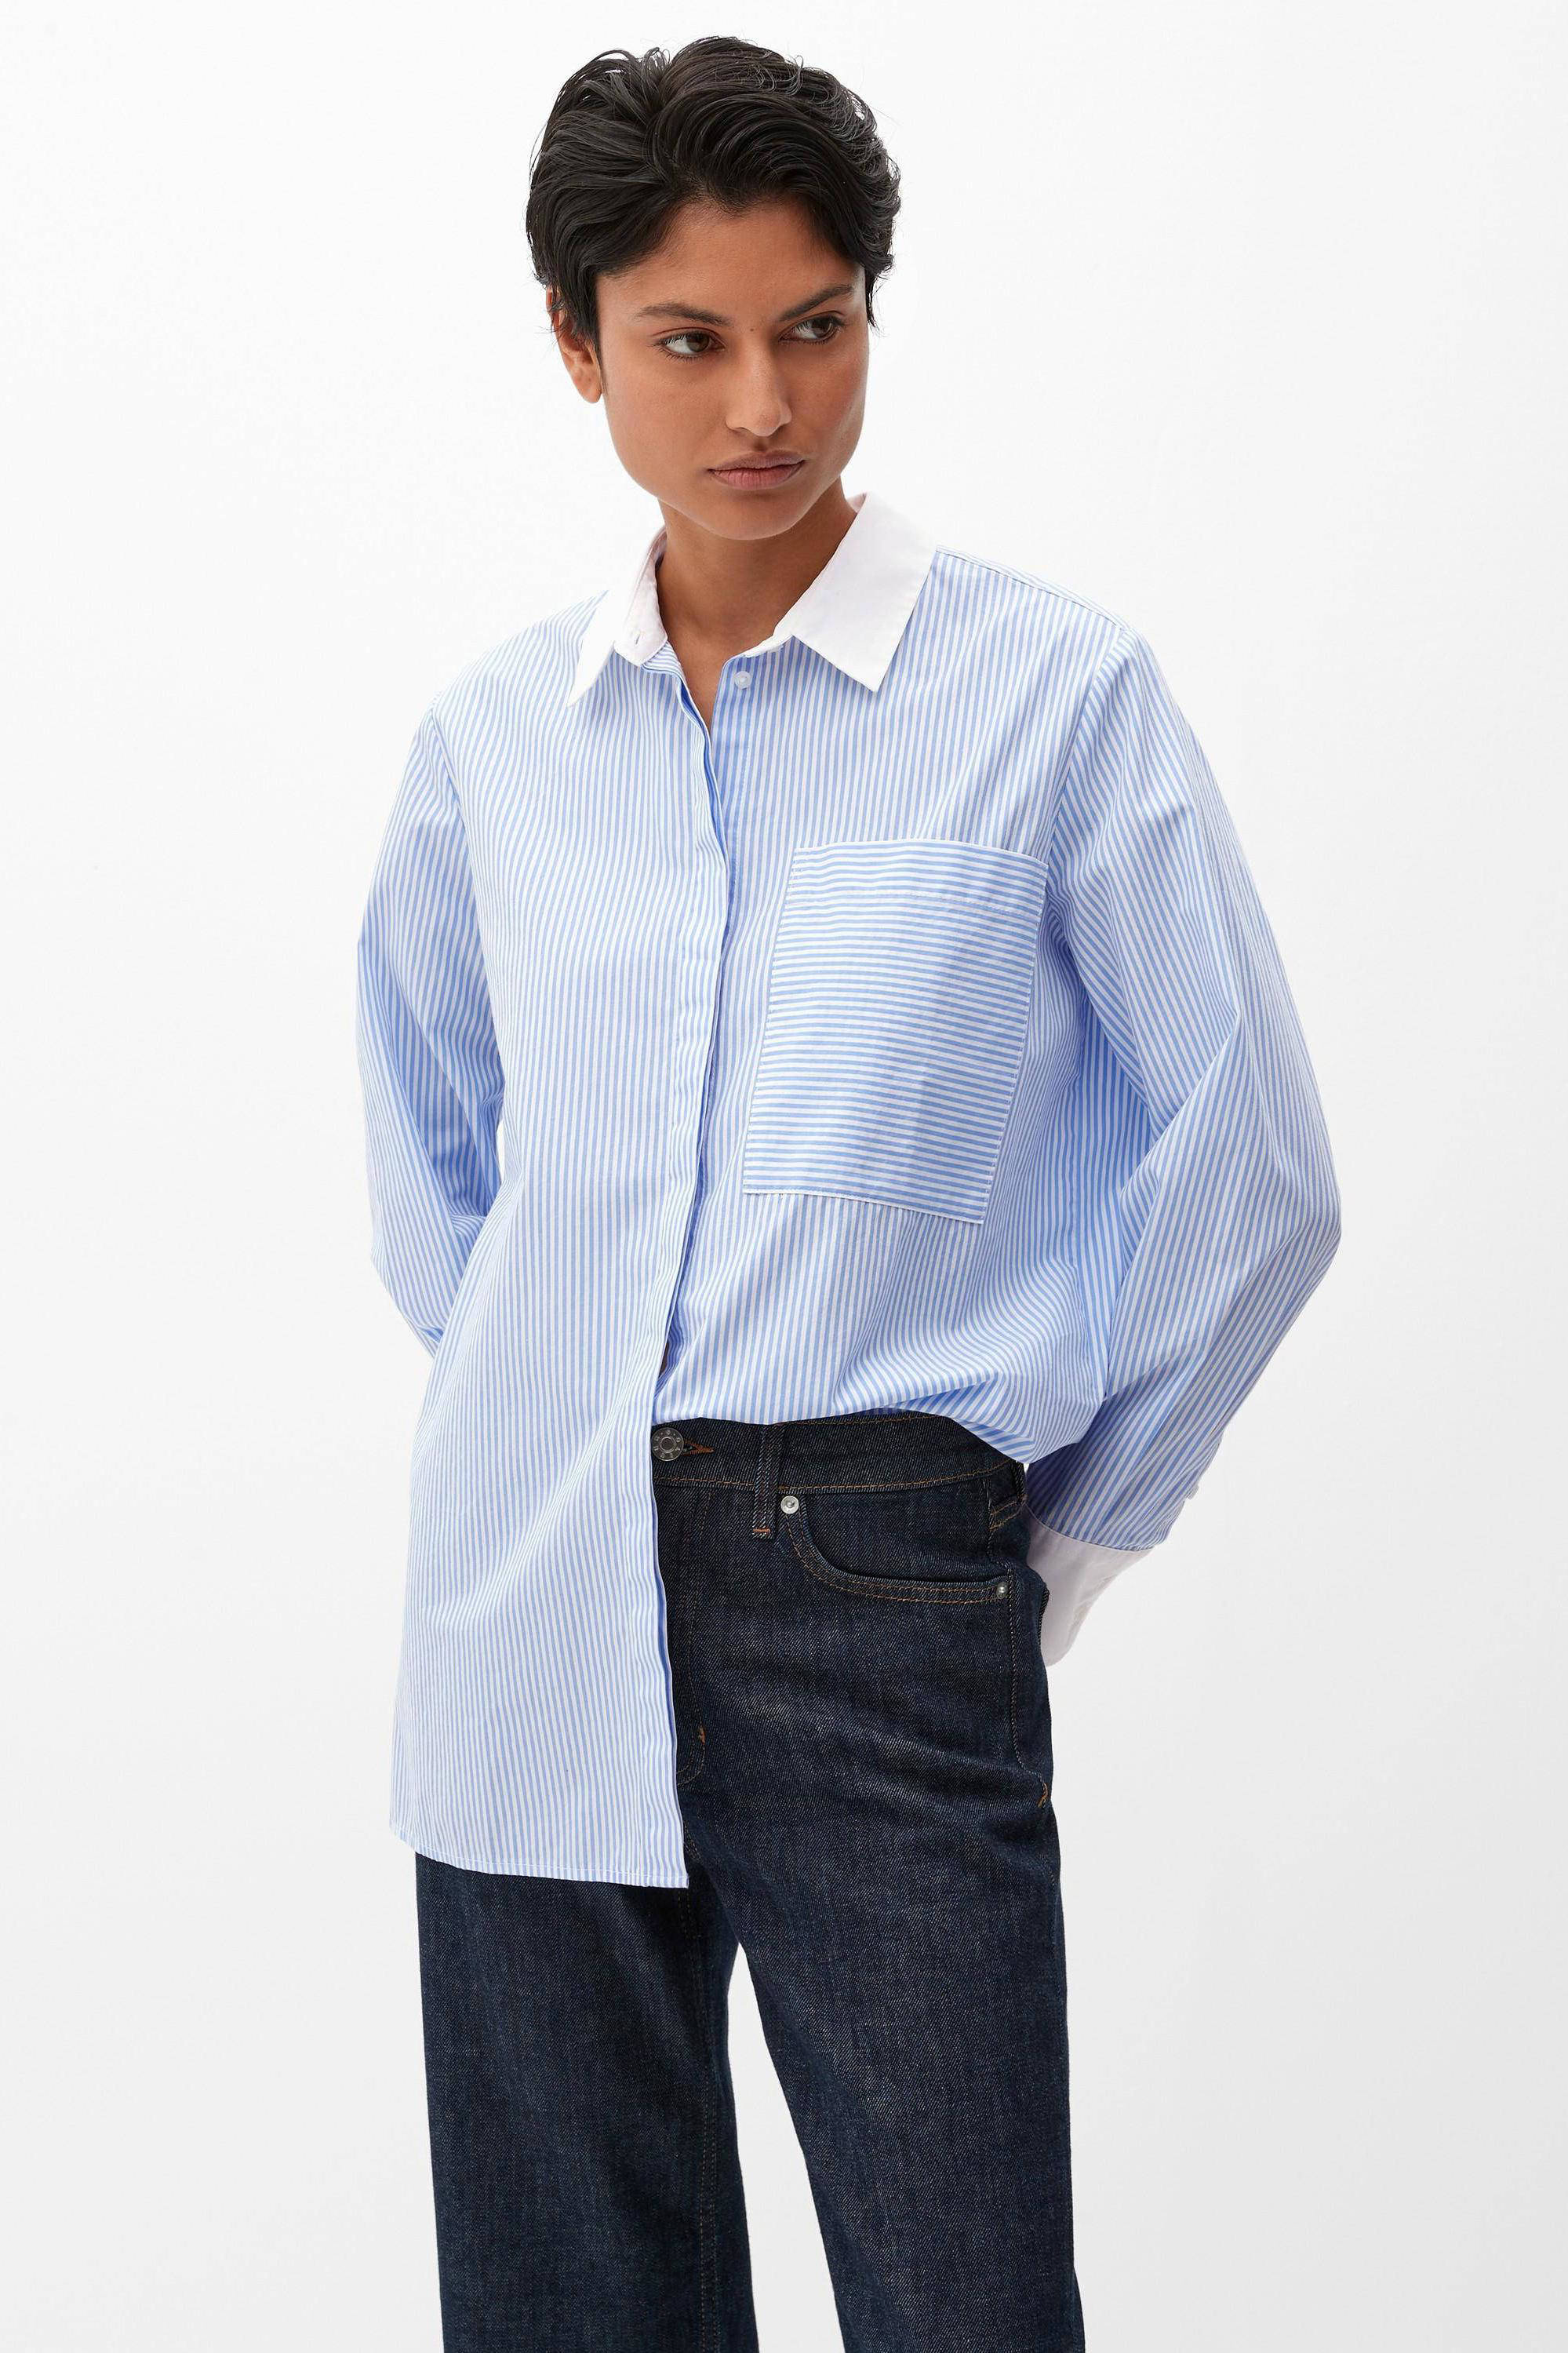 Mode Blouses Slip-over blouses s.Oliver Slip-over blouse blauw-wit volledige print casual uitstraling 